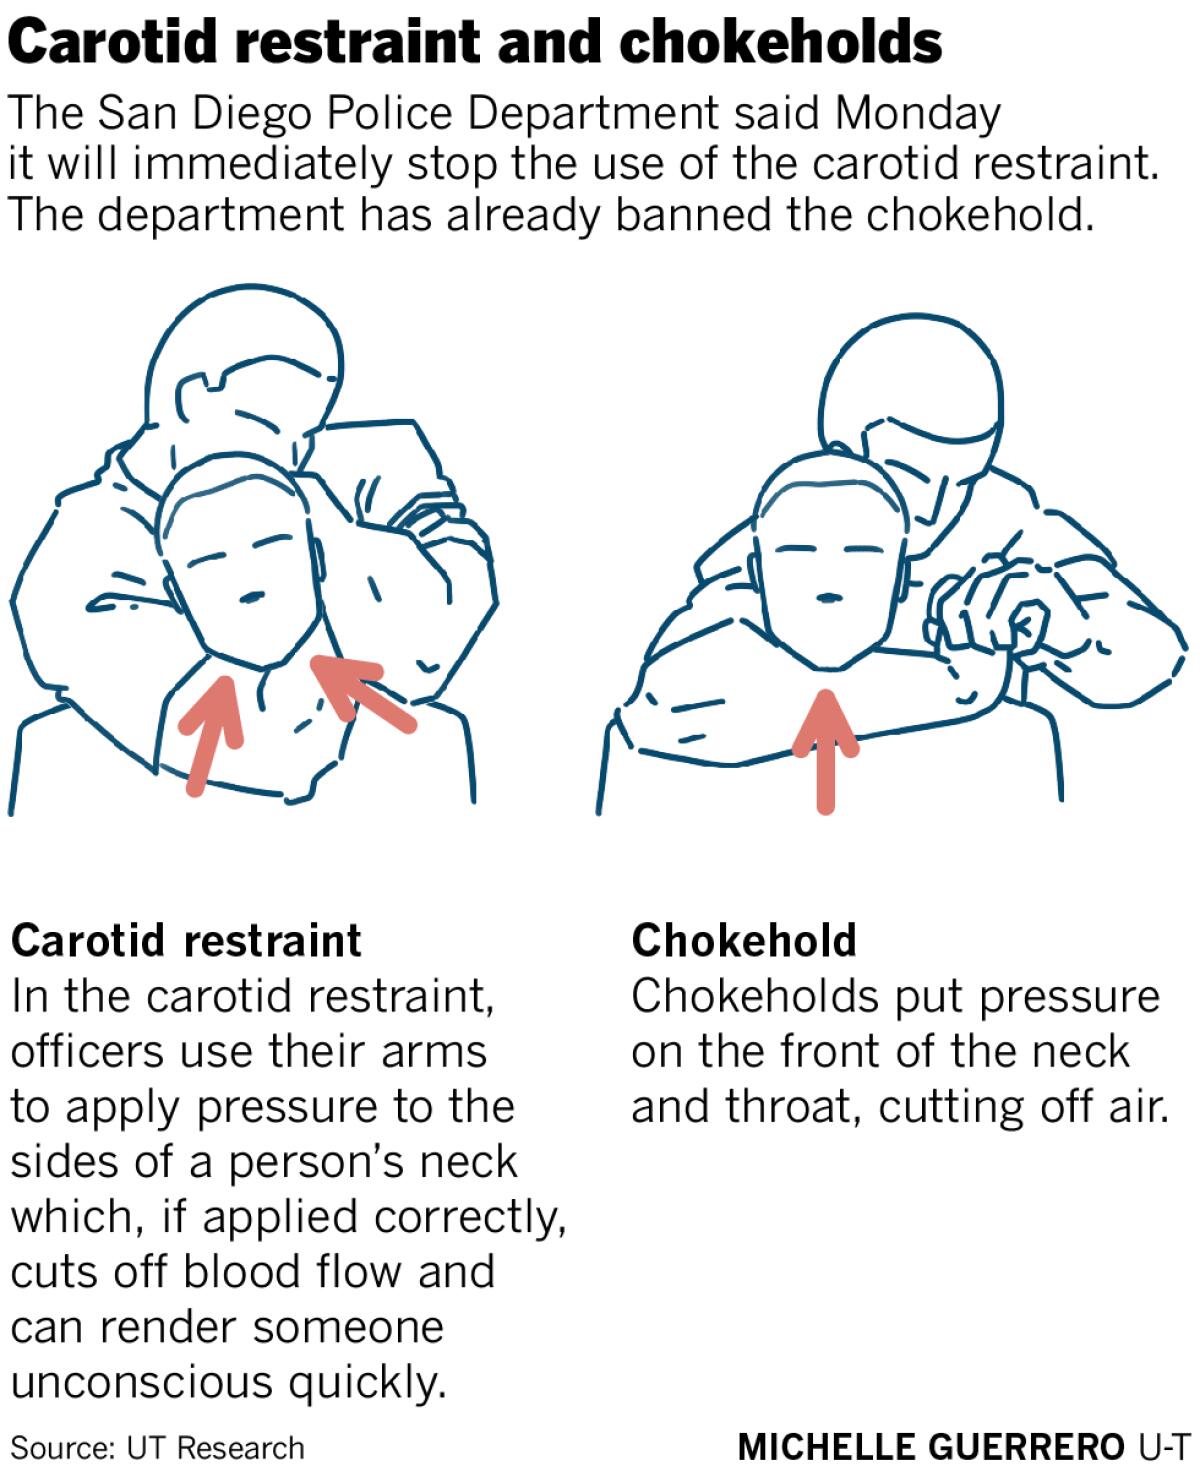 Air Chokes vs Blood Chokes – What's Better?